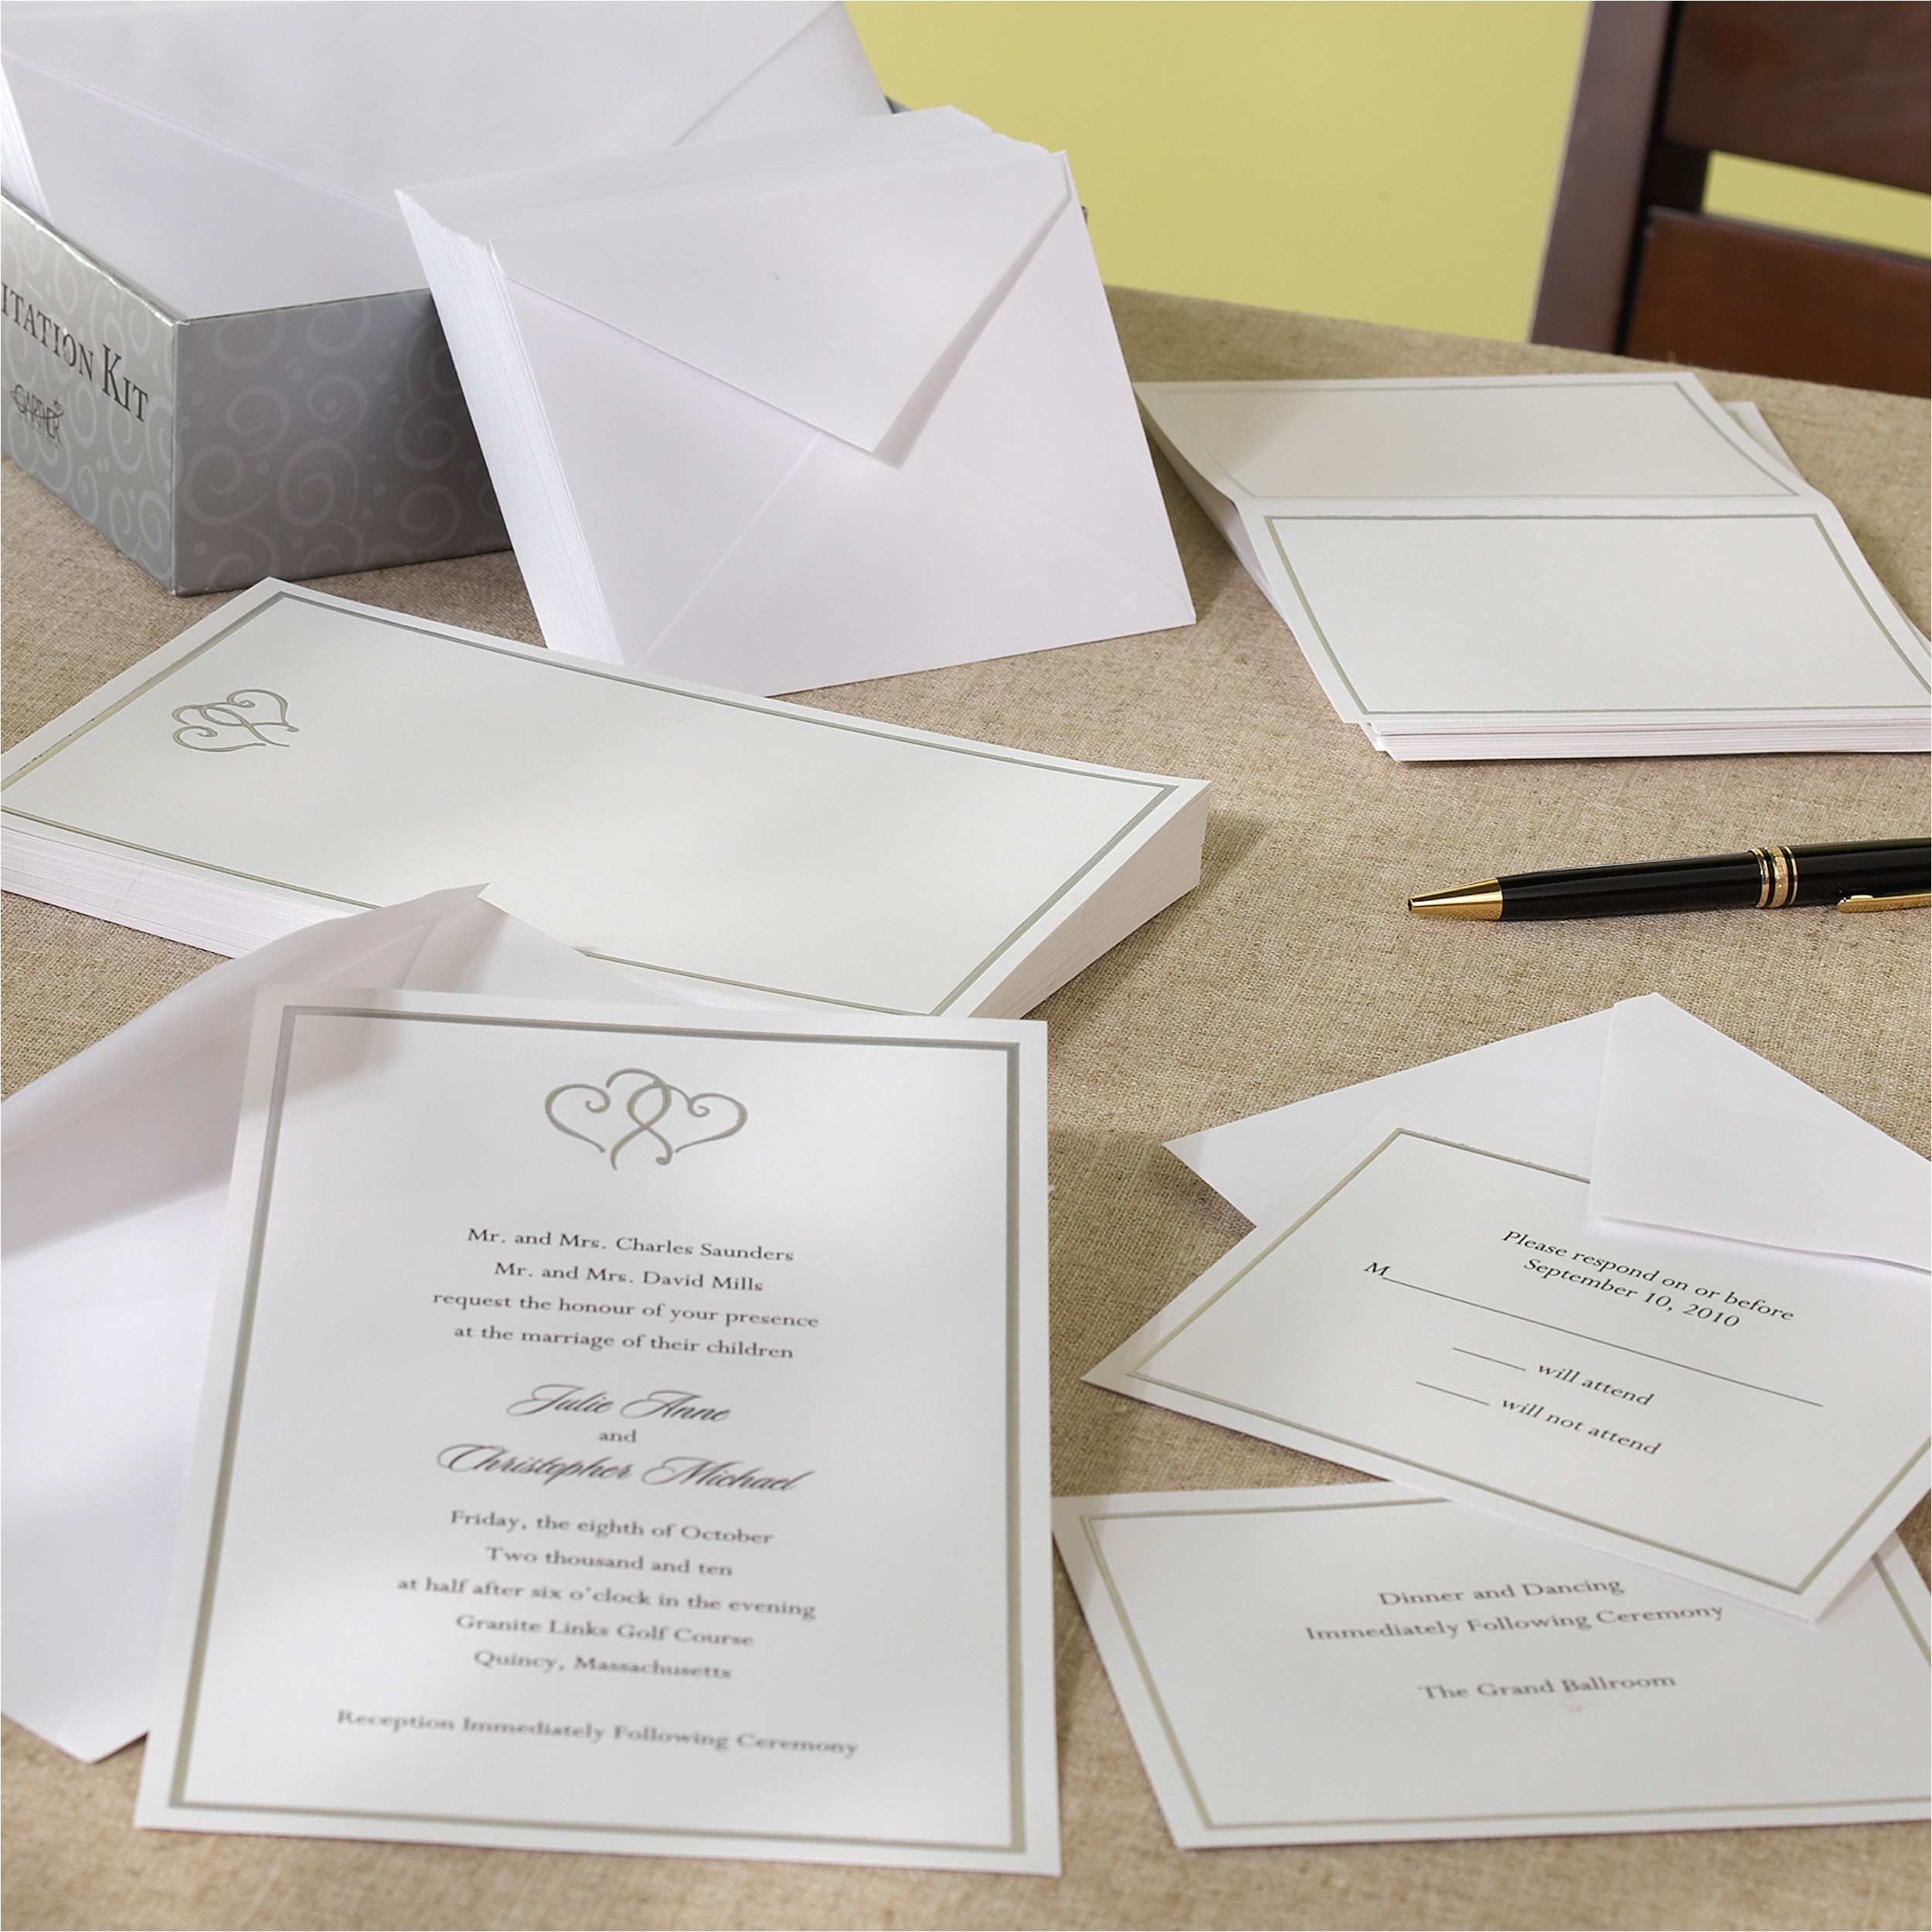 diy wedding invitations kits sale diy wedding invitation kits with invitations rsvp and